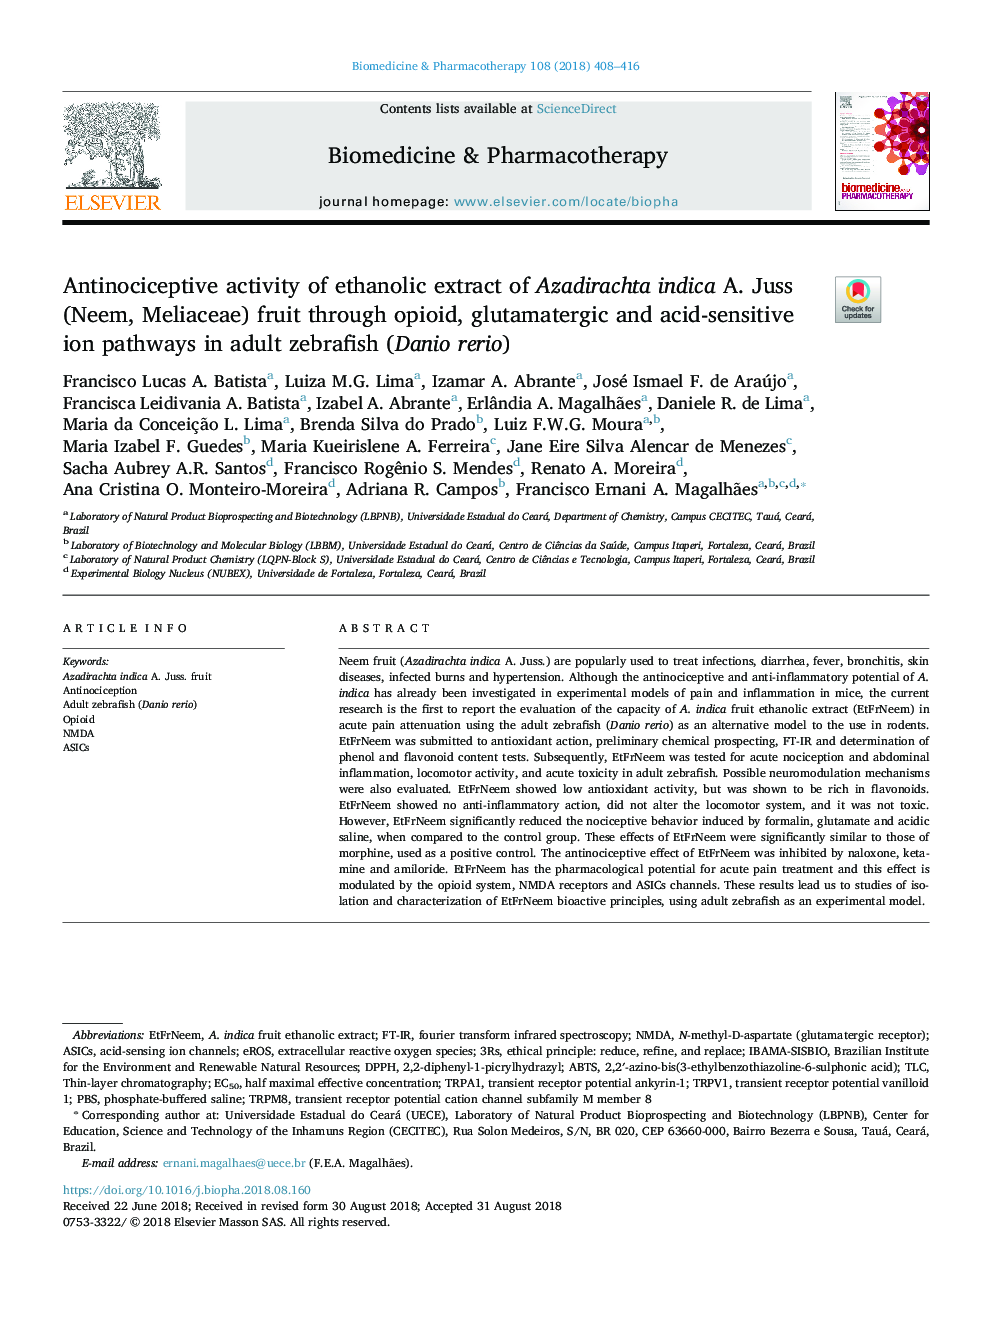 Antinociceptive activity of ethanolic extract of Azadirachta indica A. Juss (Neem, Meliaceae) fruit through opioid, glutamatergic and acid-sensitive ion pathways in adult zebrafish (Danio rerio)